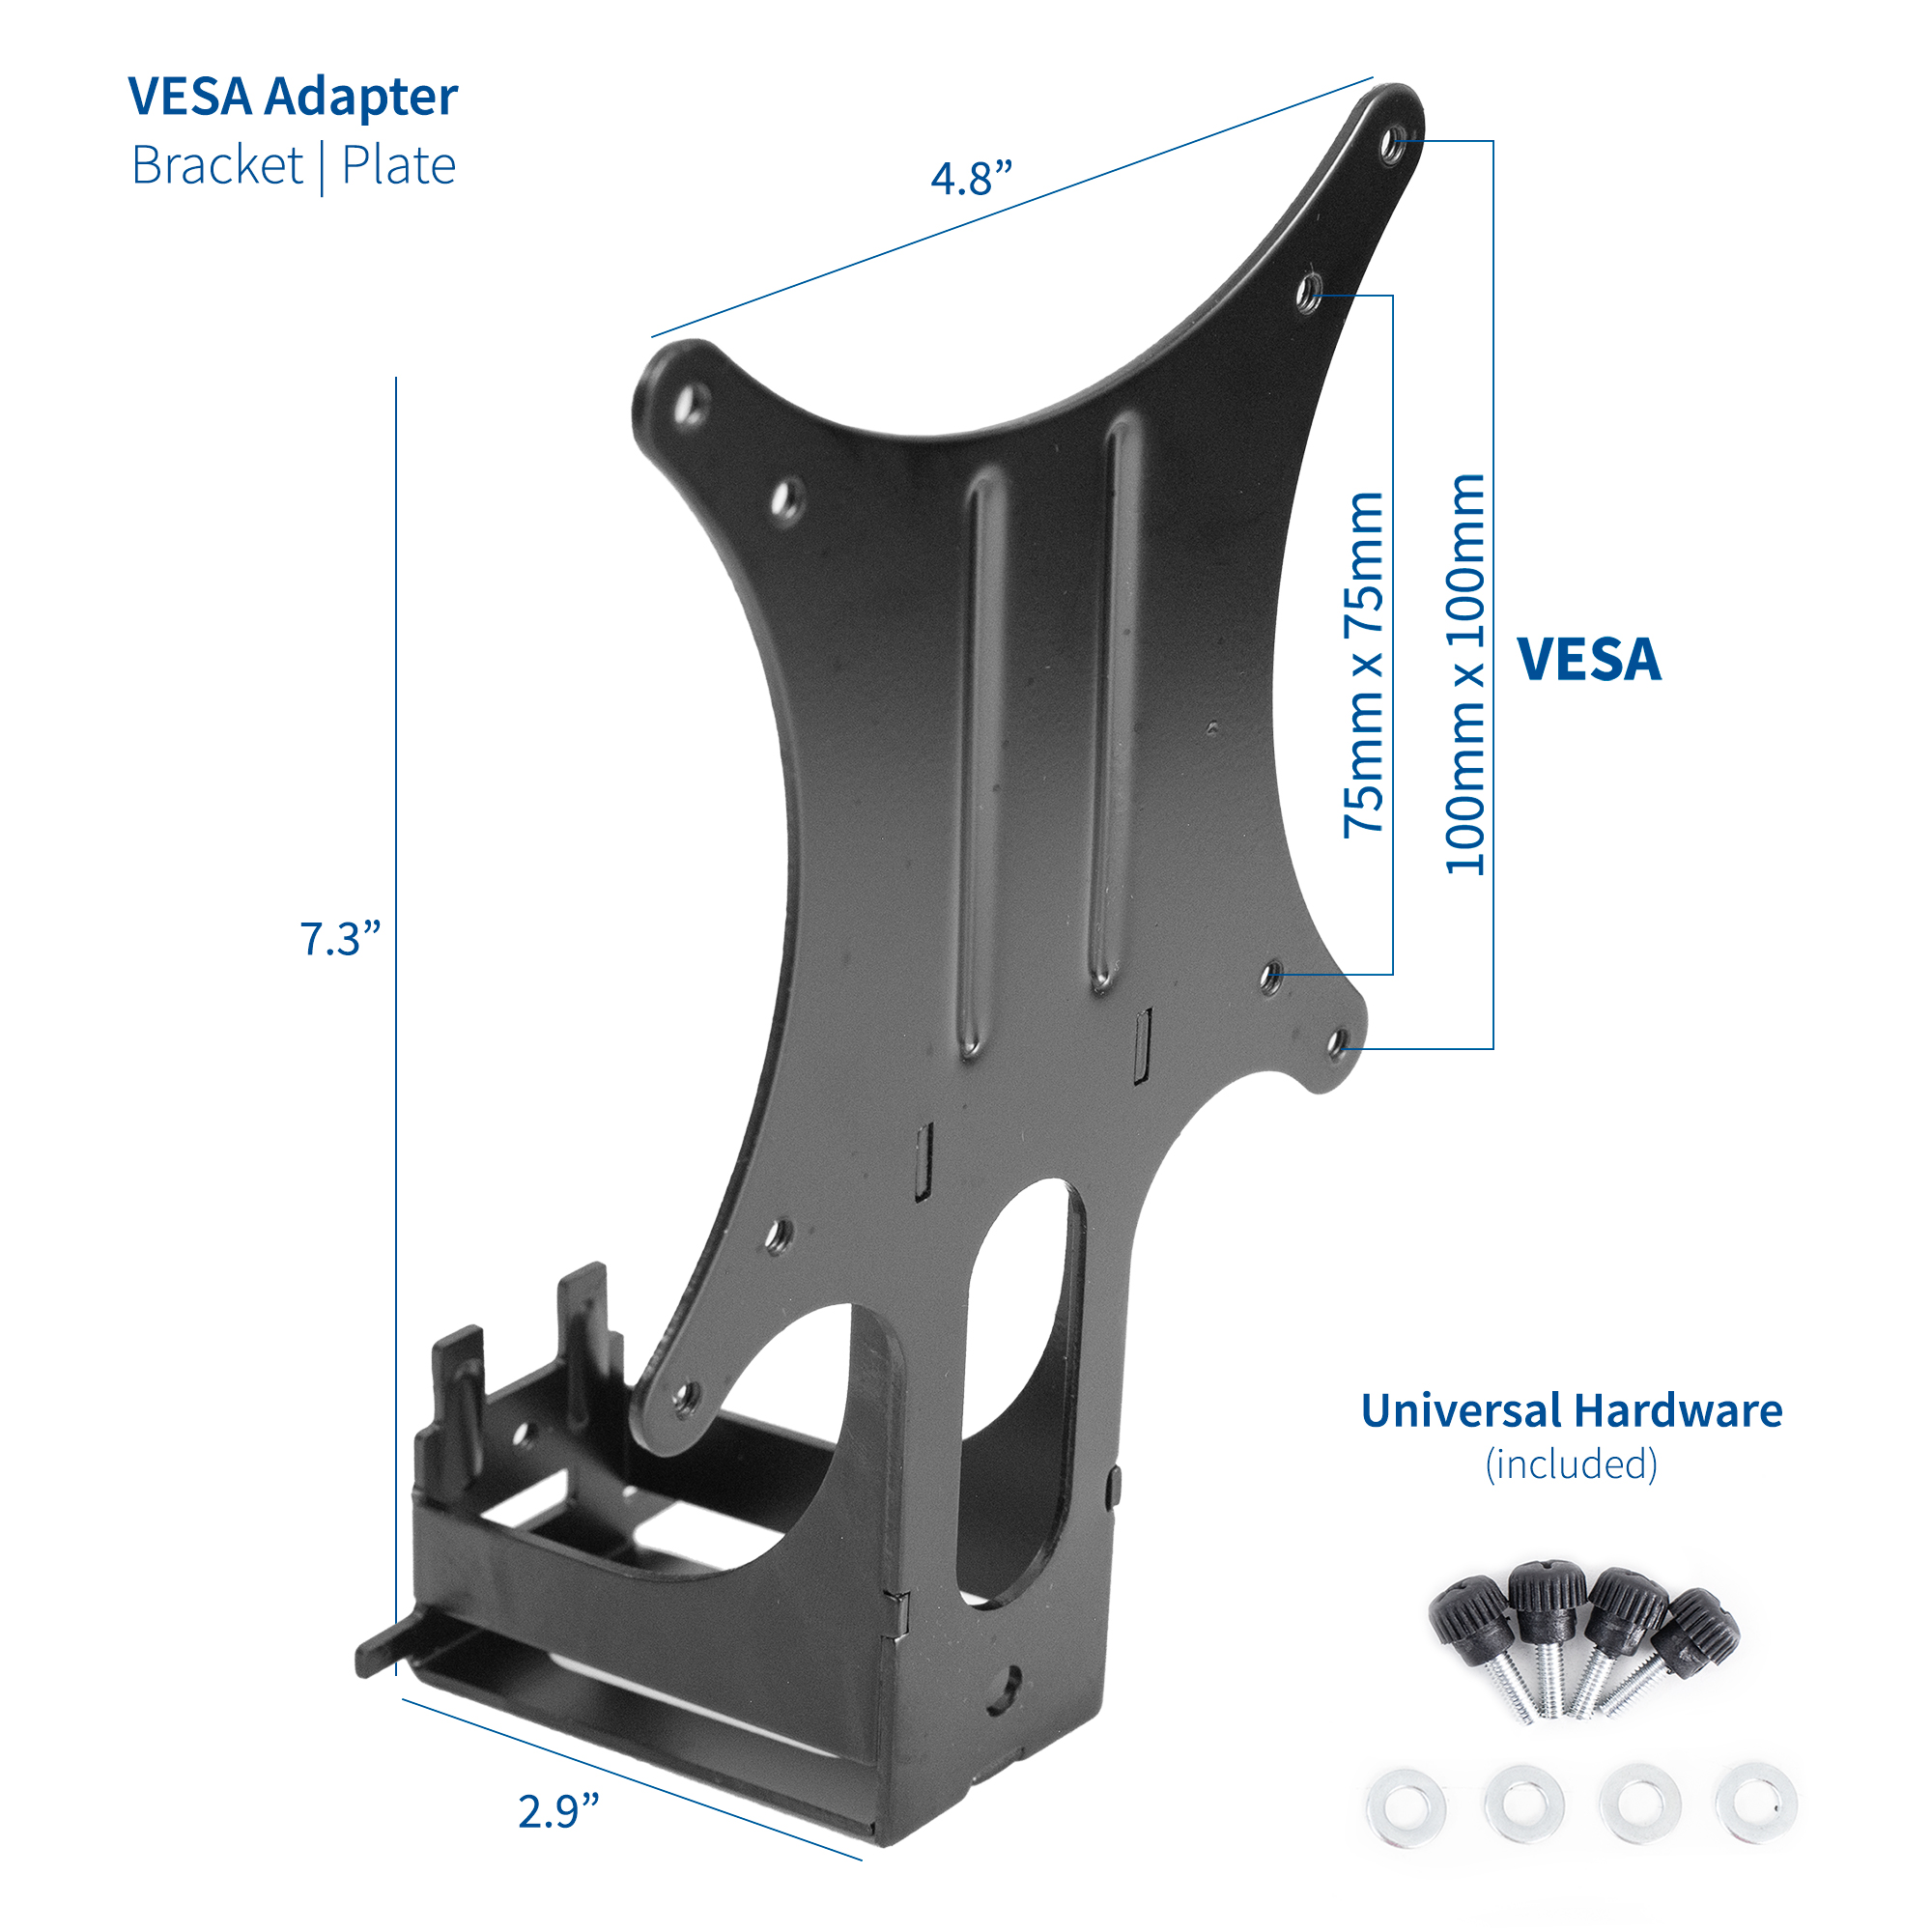 VESA Mount Adapter for Acer Monitors | Fits XG270HU | eBay